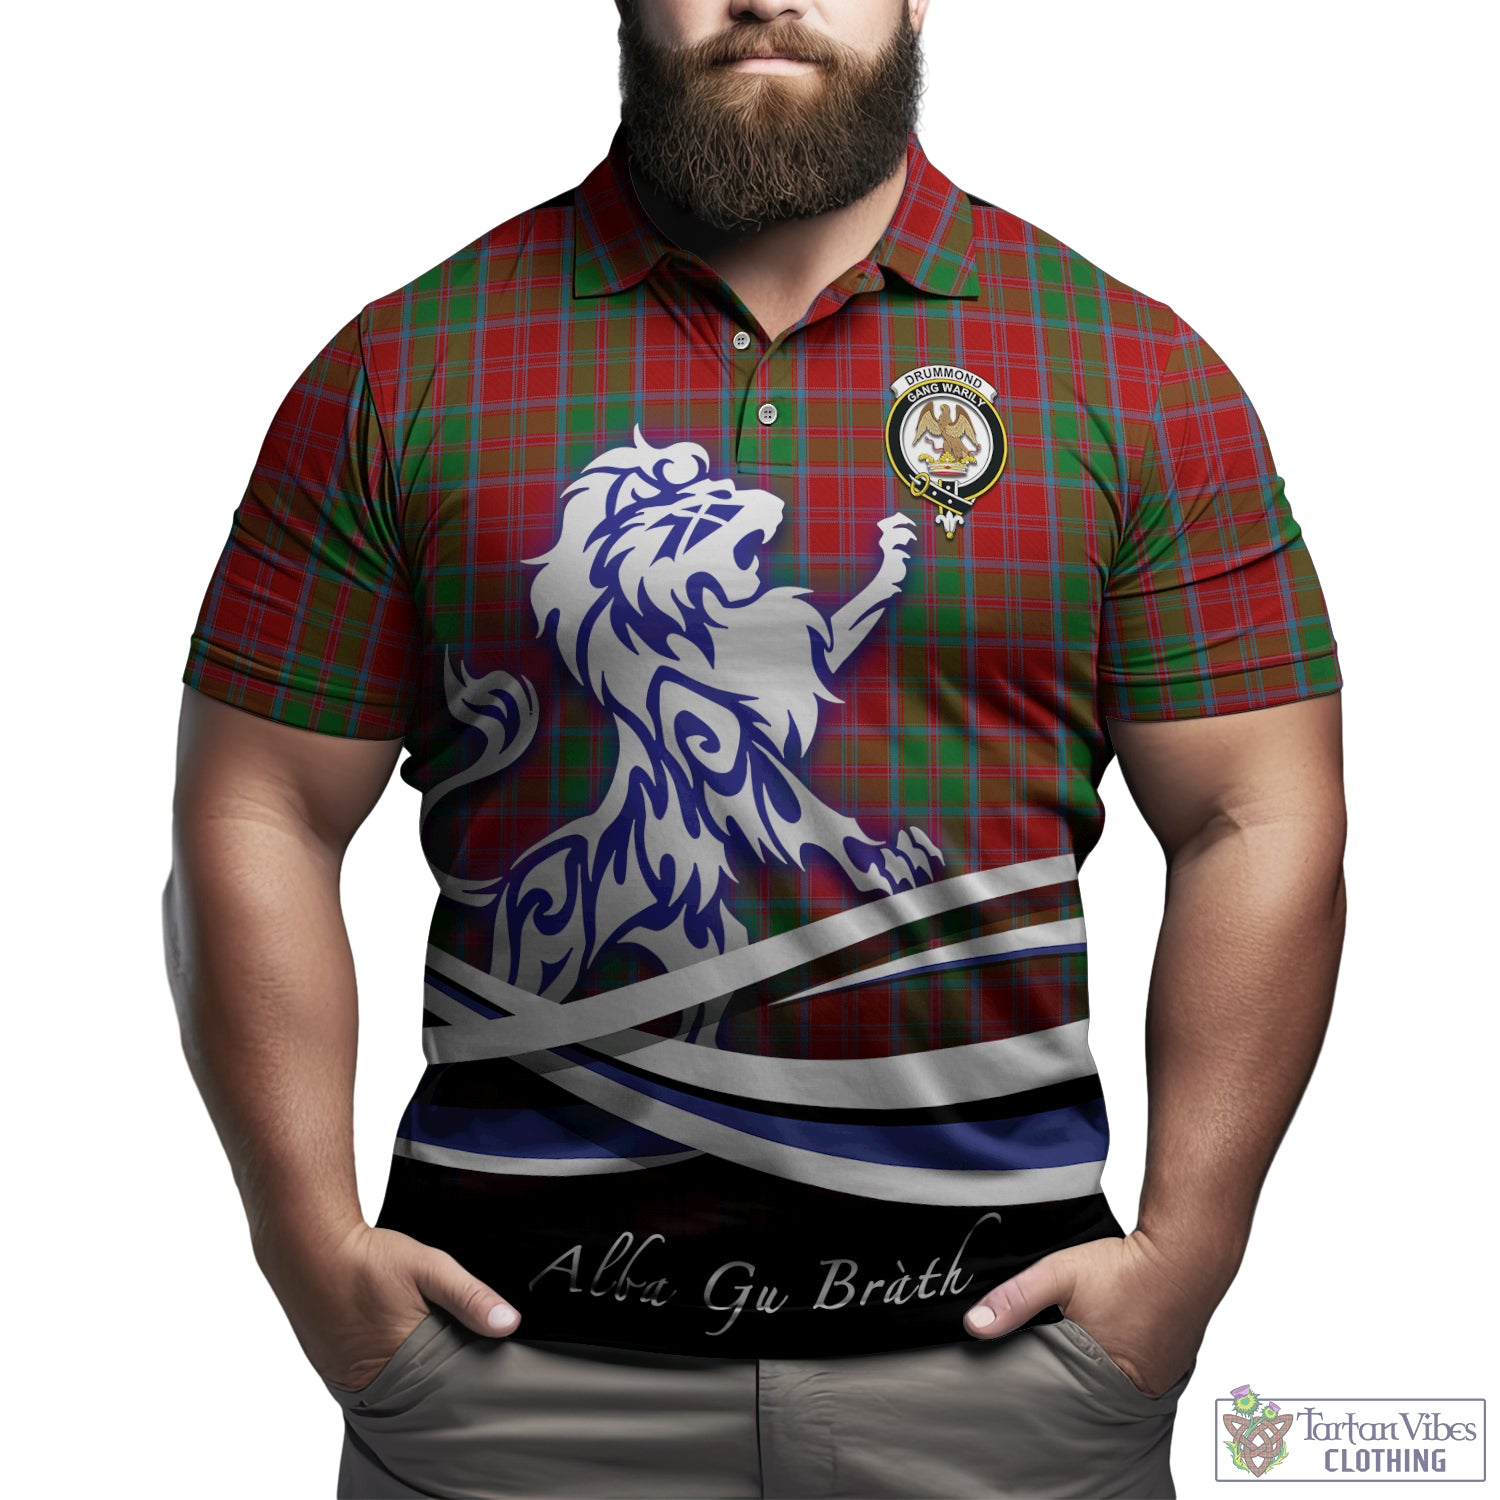 drummond-tartan-polo-shirt-with-alba-gu-brath-regal-lion-emblem